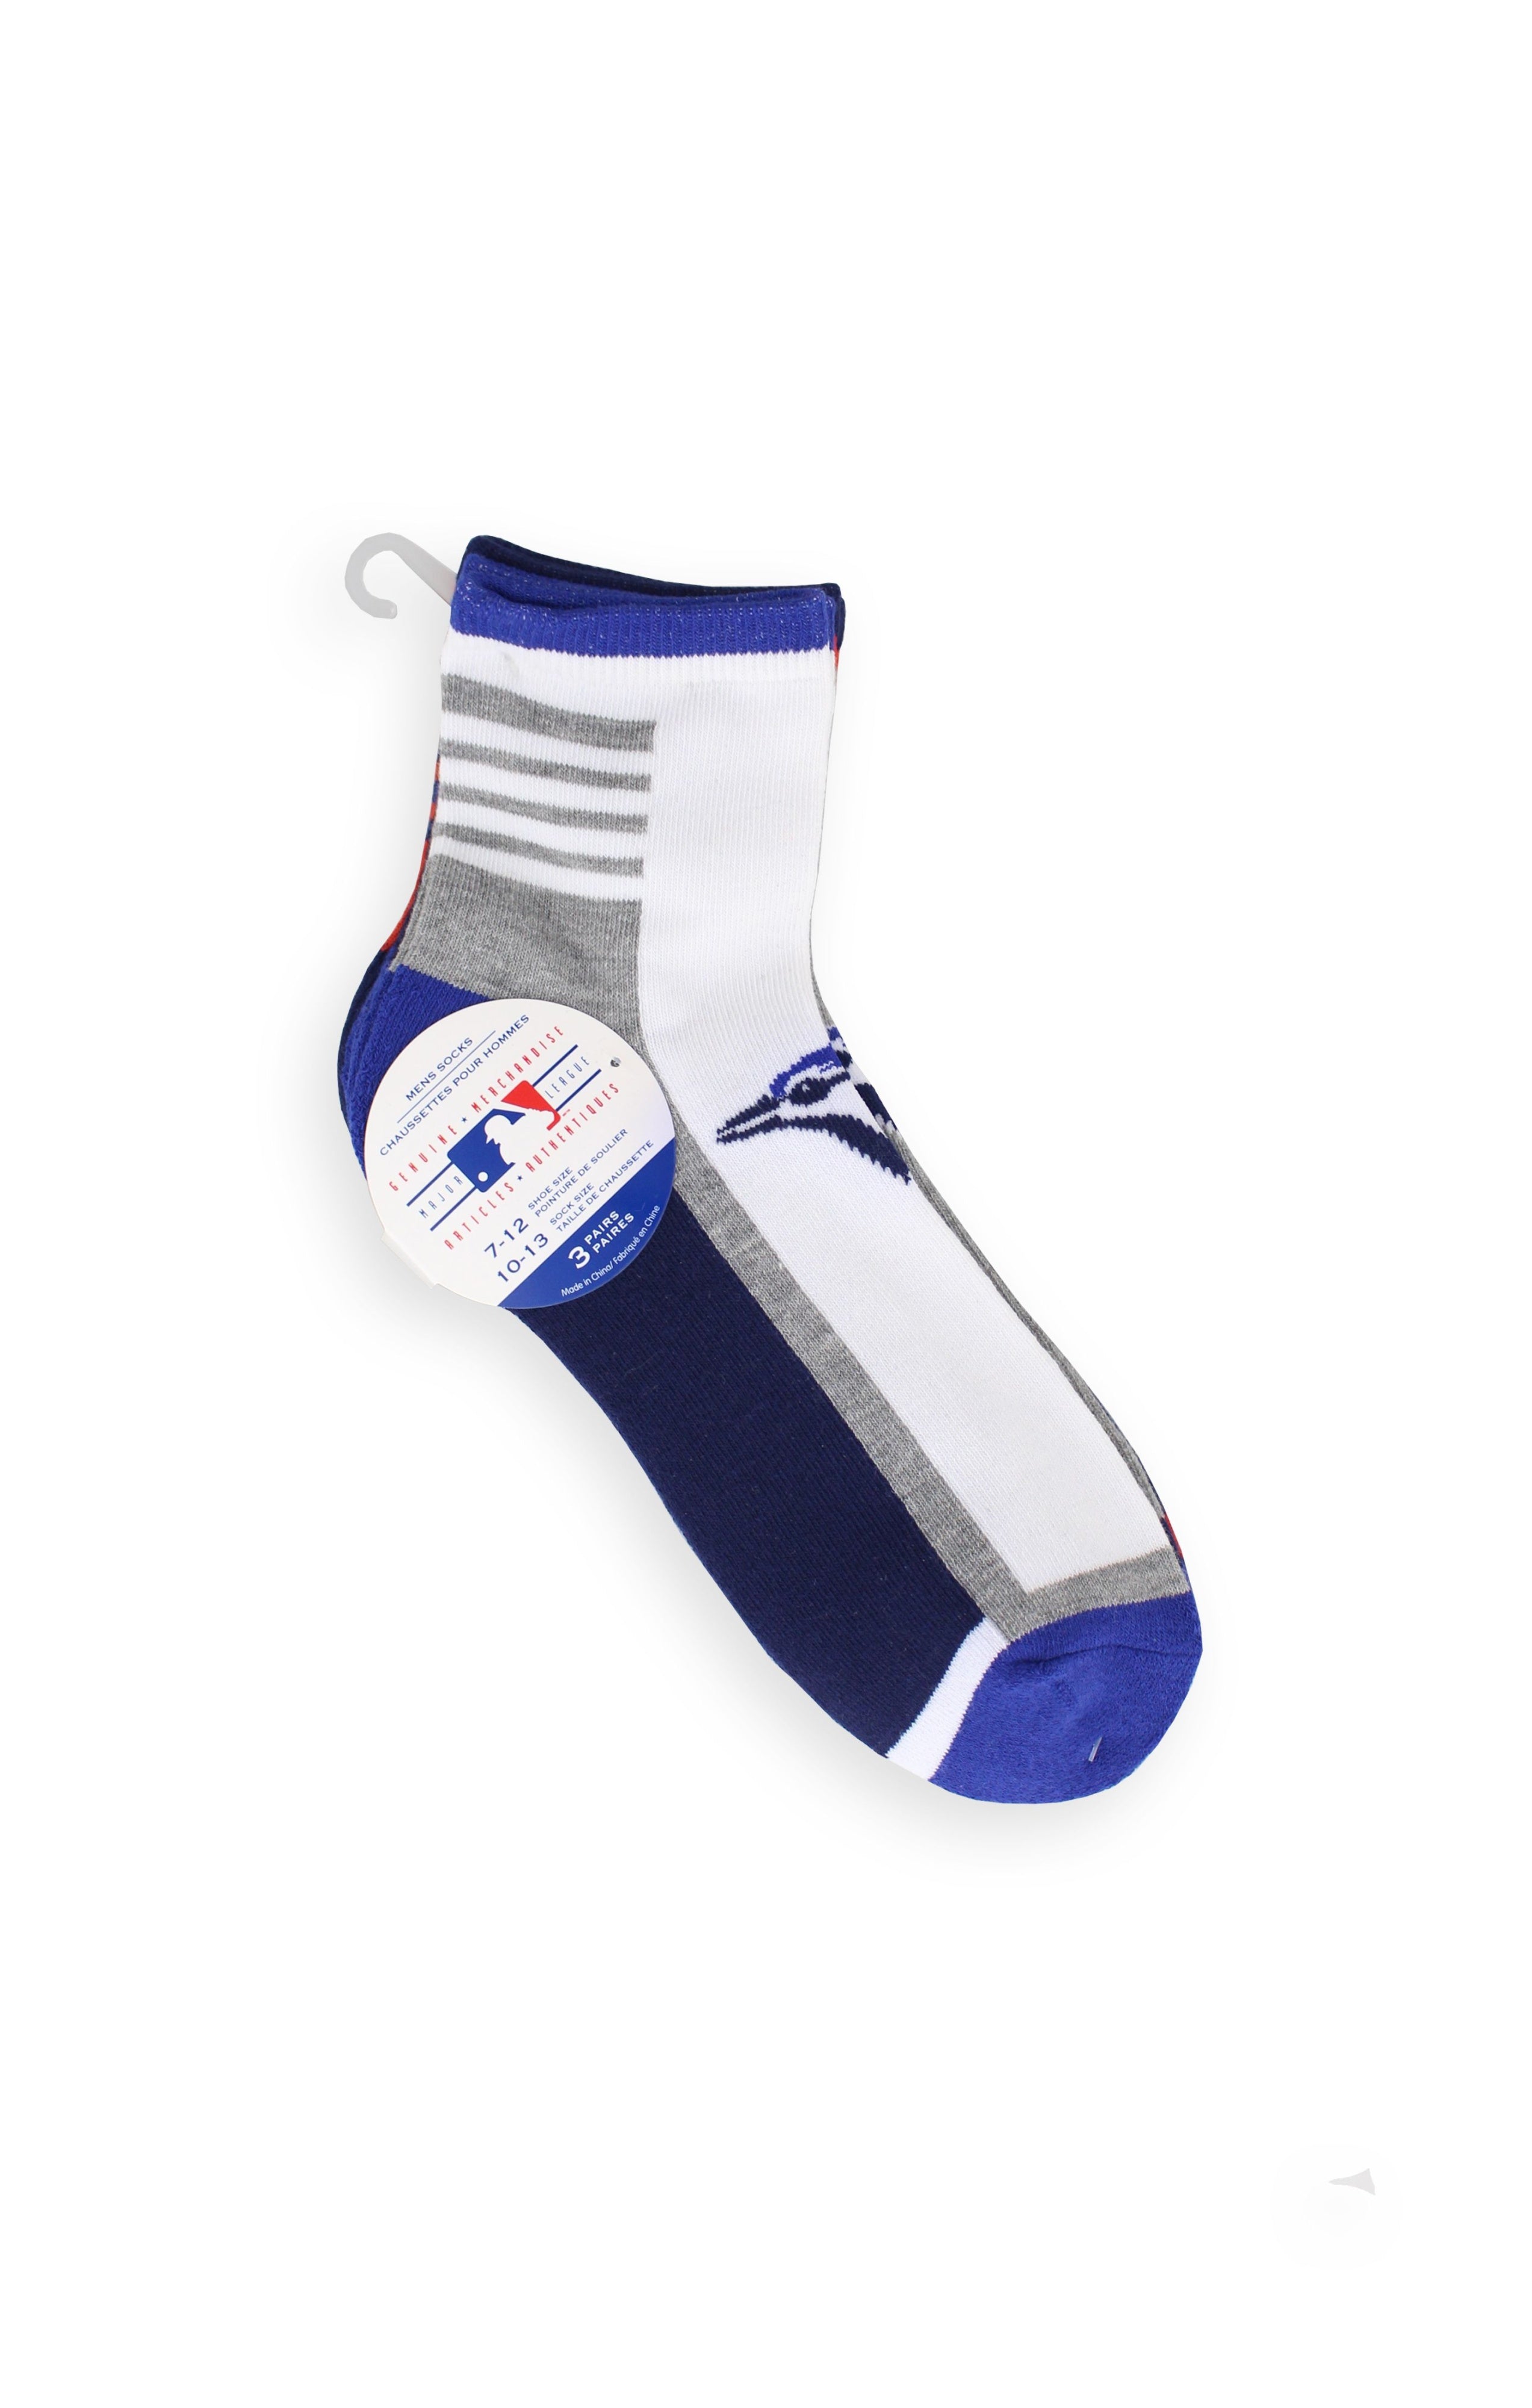 Toronto Blue Jays Socks Quarter Length 3 Pack Mens Shoe Size 7-12